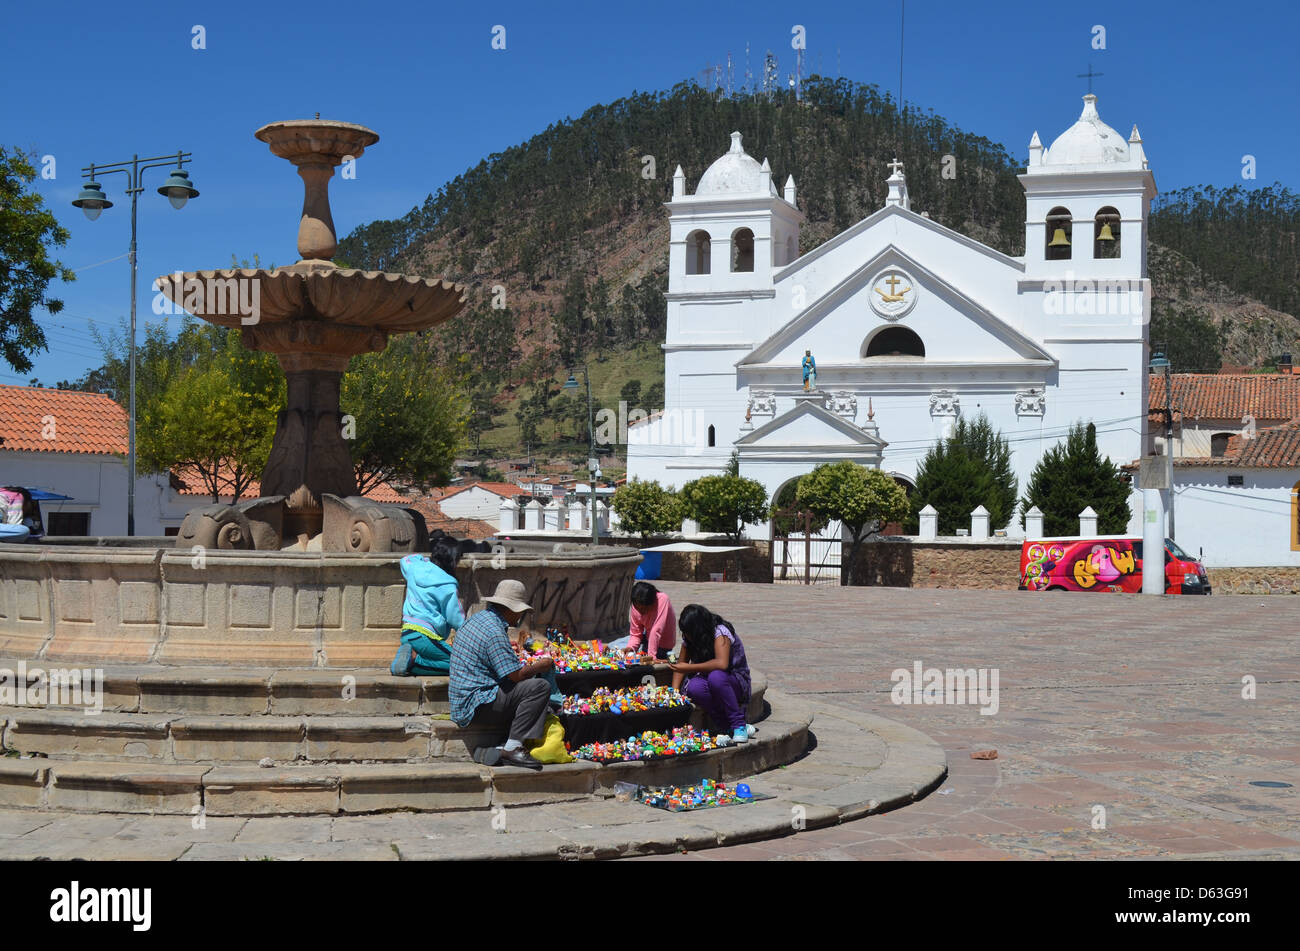 Colonial architecture in the Recoleta area of Sucre, Bolivia Stock Photo